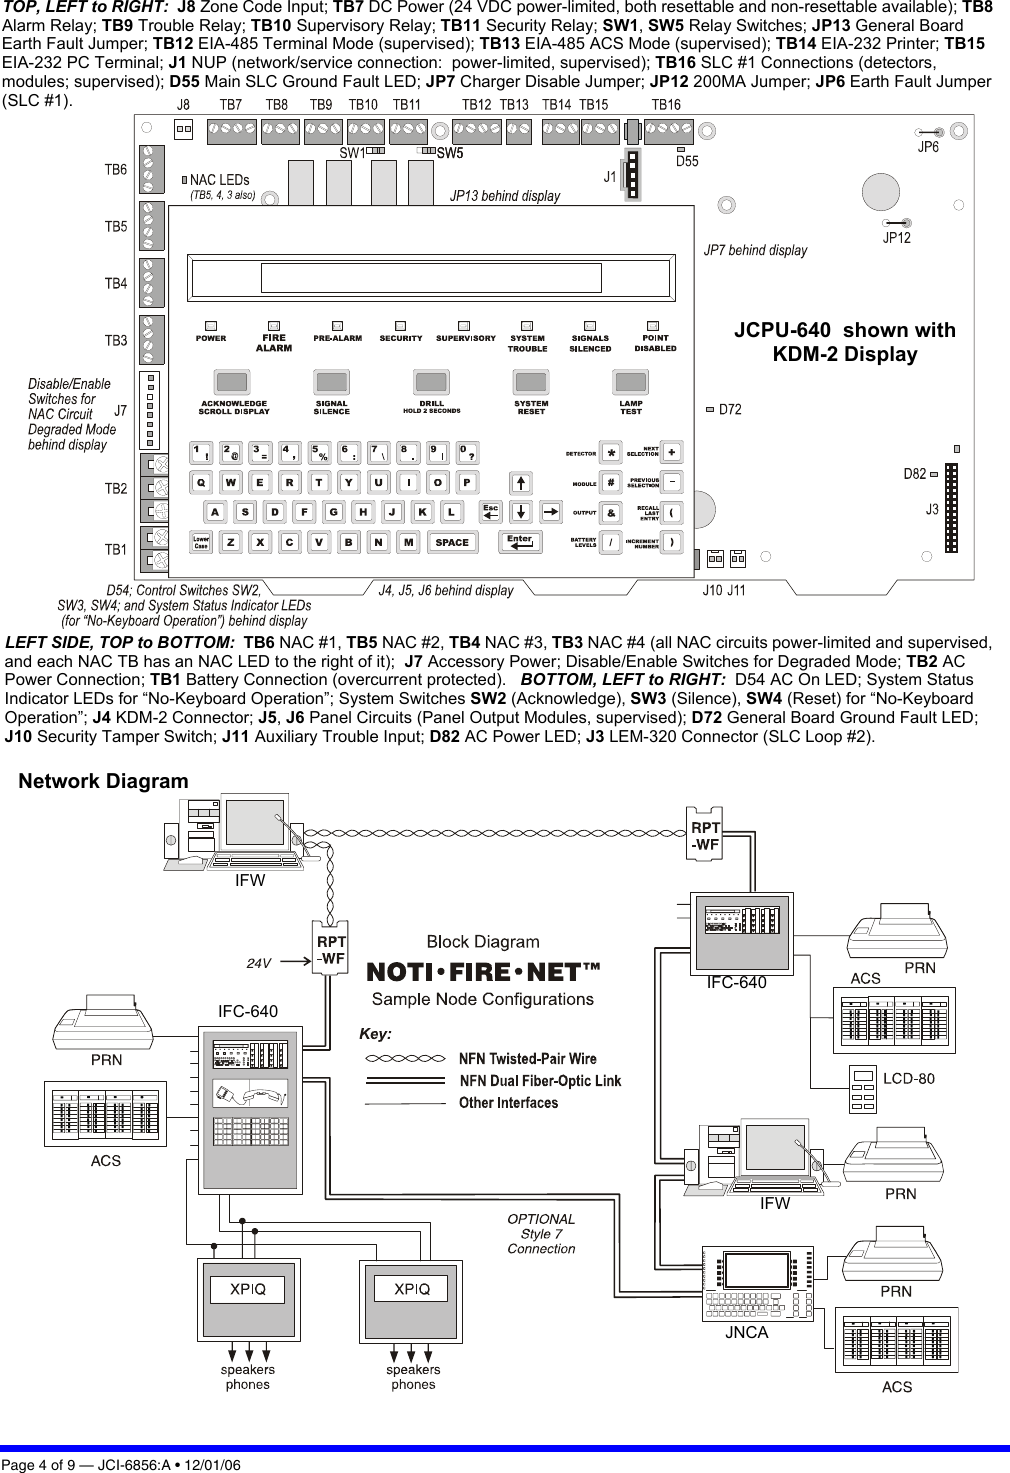 Page 4 of 9 - Johnson-Controls Johnson-Controls-Ifc-640-Users-Manual- IFC-640 Intelligent Addressable Fire Alarm System Catalog Page  Johnson-controls-ifc-640-users-manual